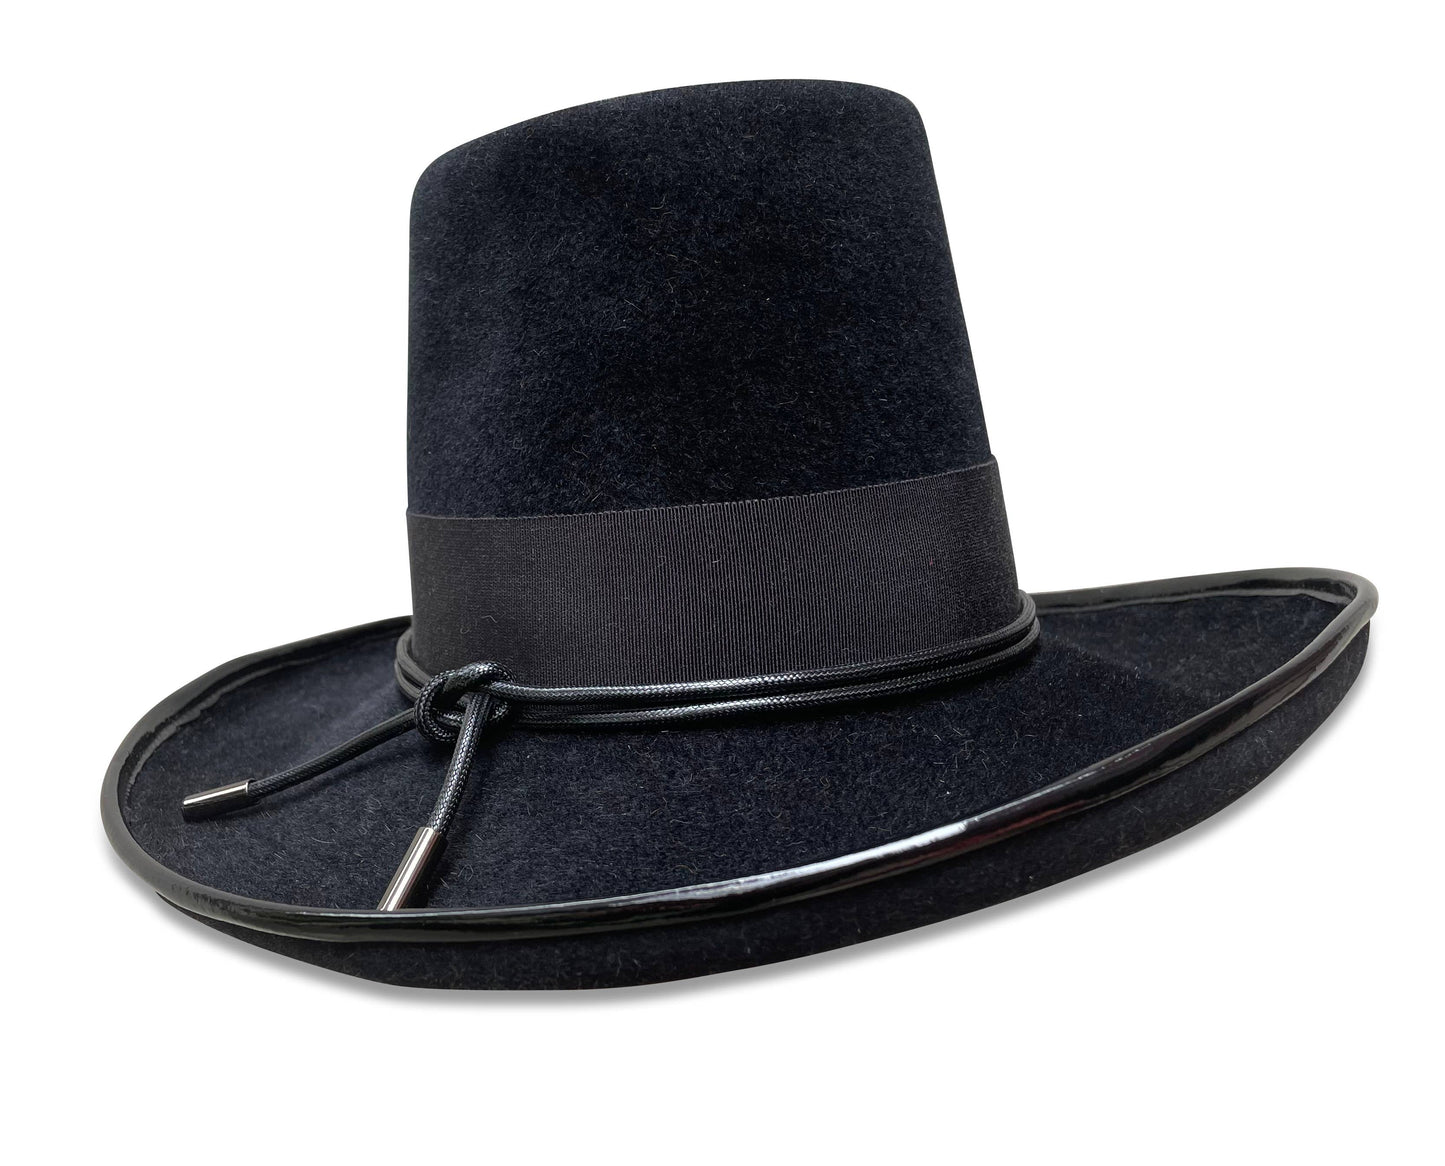 Black Felt Top Hat Felt Black Patent Leather Trim La Dolce Vita